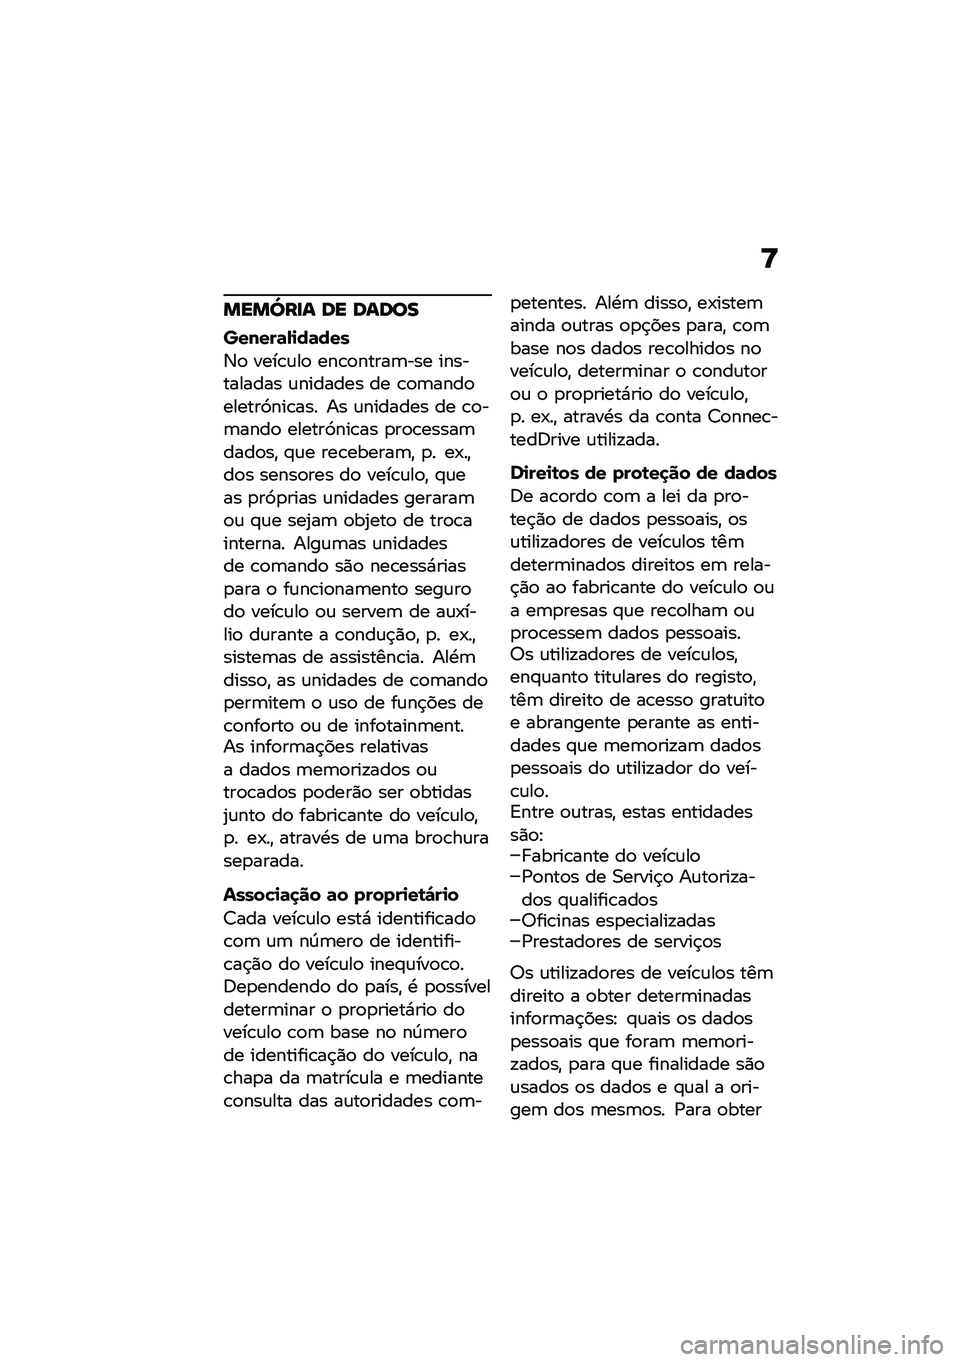 BMW MOTORRAD R NINE T 2021  Manual do condutor (in Portuguese) �>
����[��
� �� �����
� �����	�,�
��	���
�3�
 ����\b�\f��
 ���\b�
�����	��� ����������� �\f������� �� �\b�
�	����
������9���\b��� ��